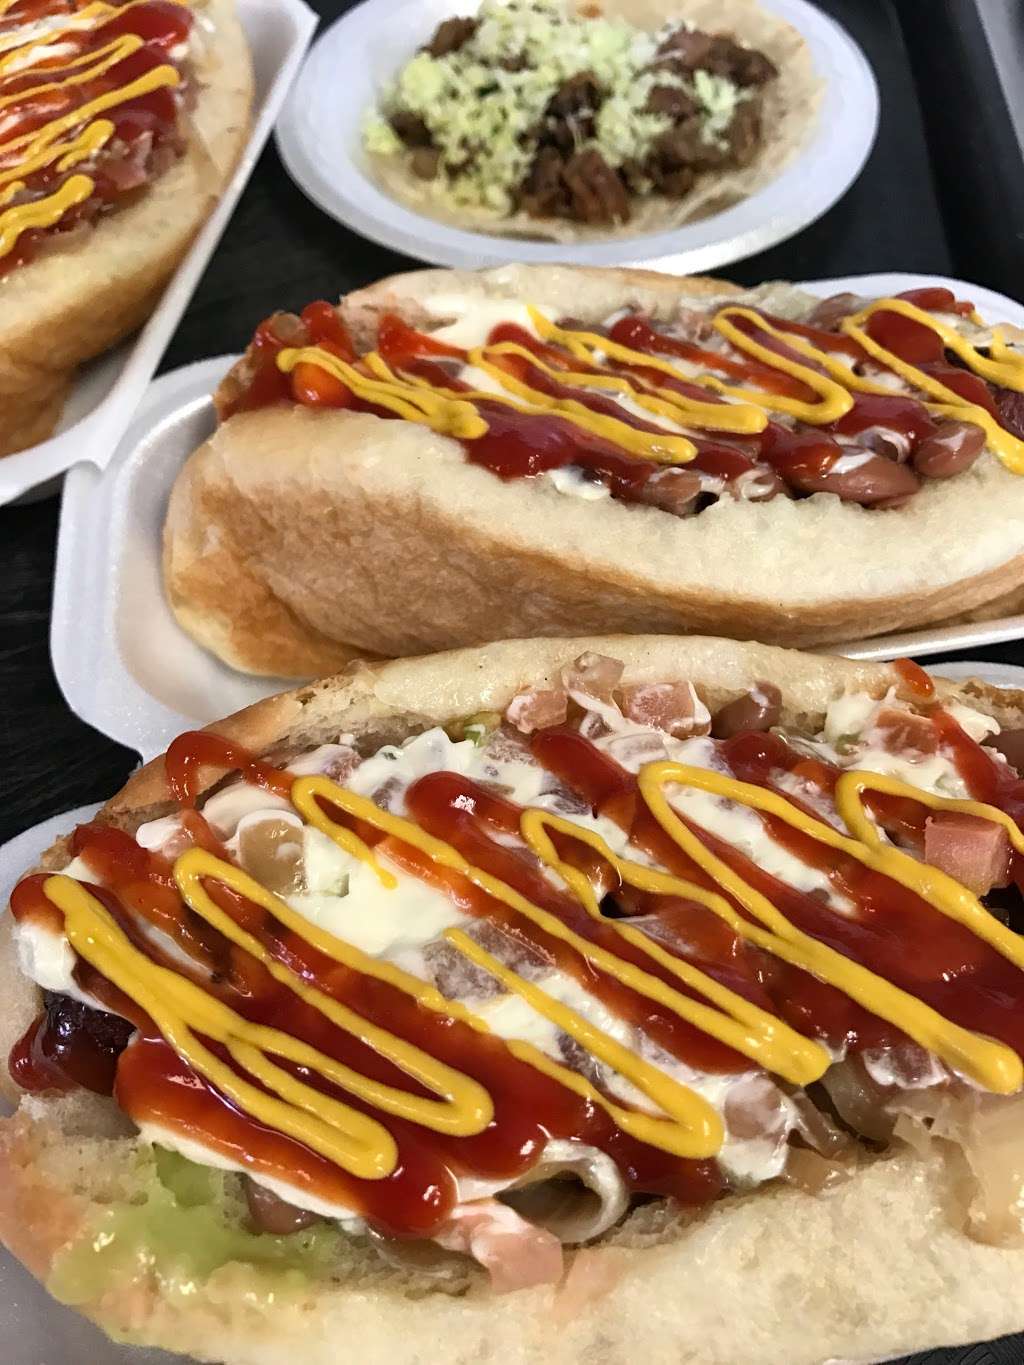 Mickys Hot Dogs | 108 W Broadway Rd, Mesa, AZ 85210 | Phone: (480) 668-7777